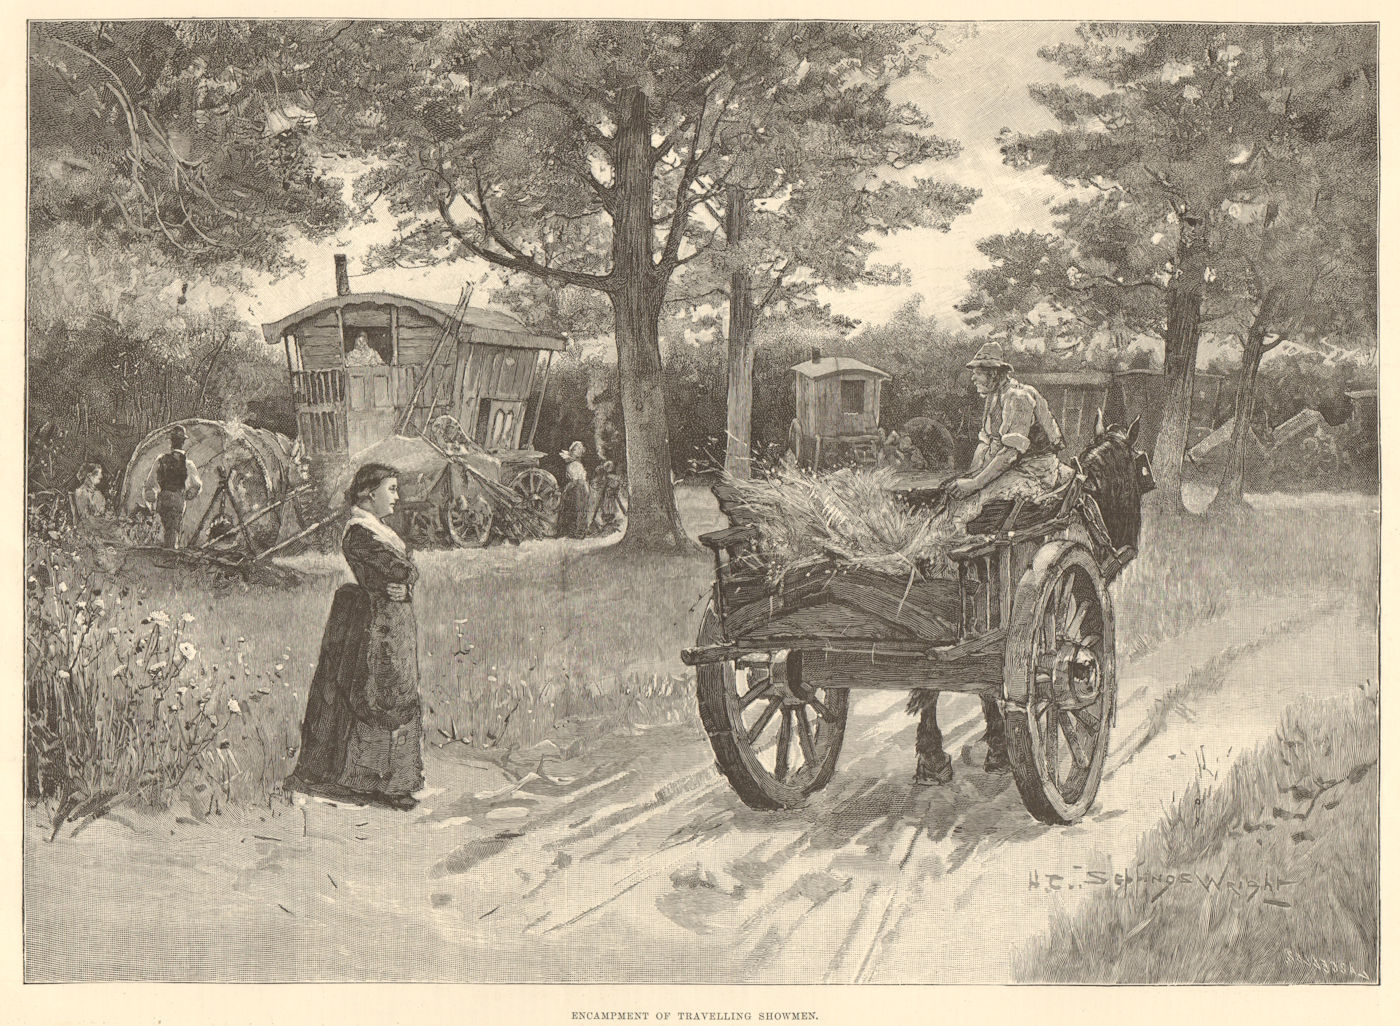 Associate Product Encampment of travelling showmen. Transport. Transport 1891 old antique print